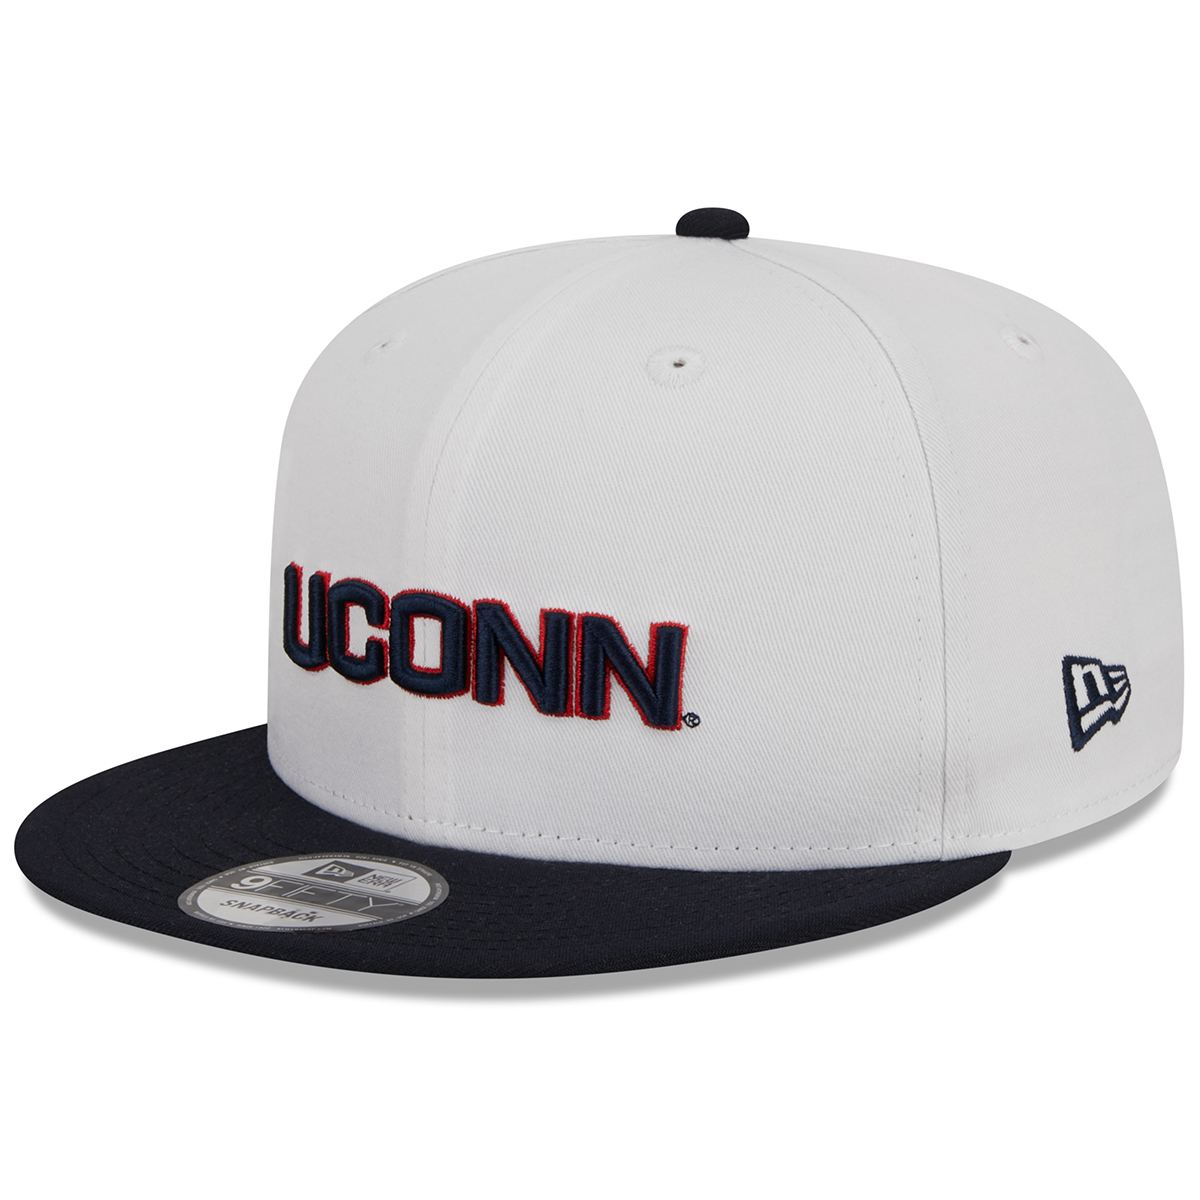 Uconn Men's New Era 9Fifty Snapback Adjustable Hat